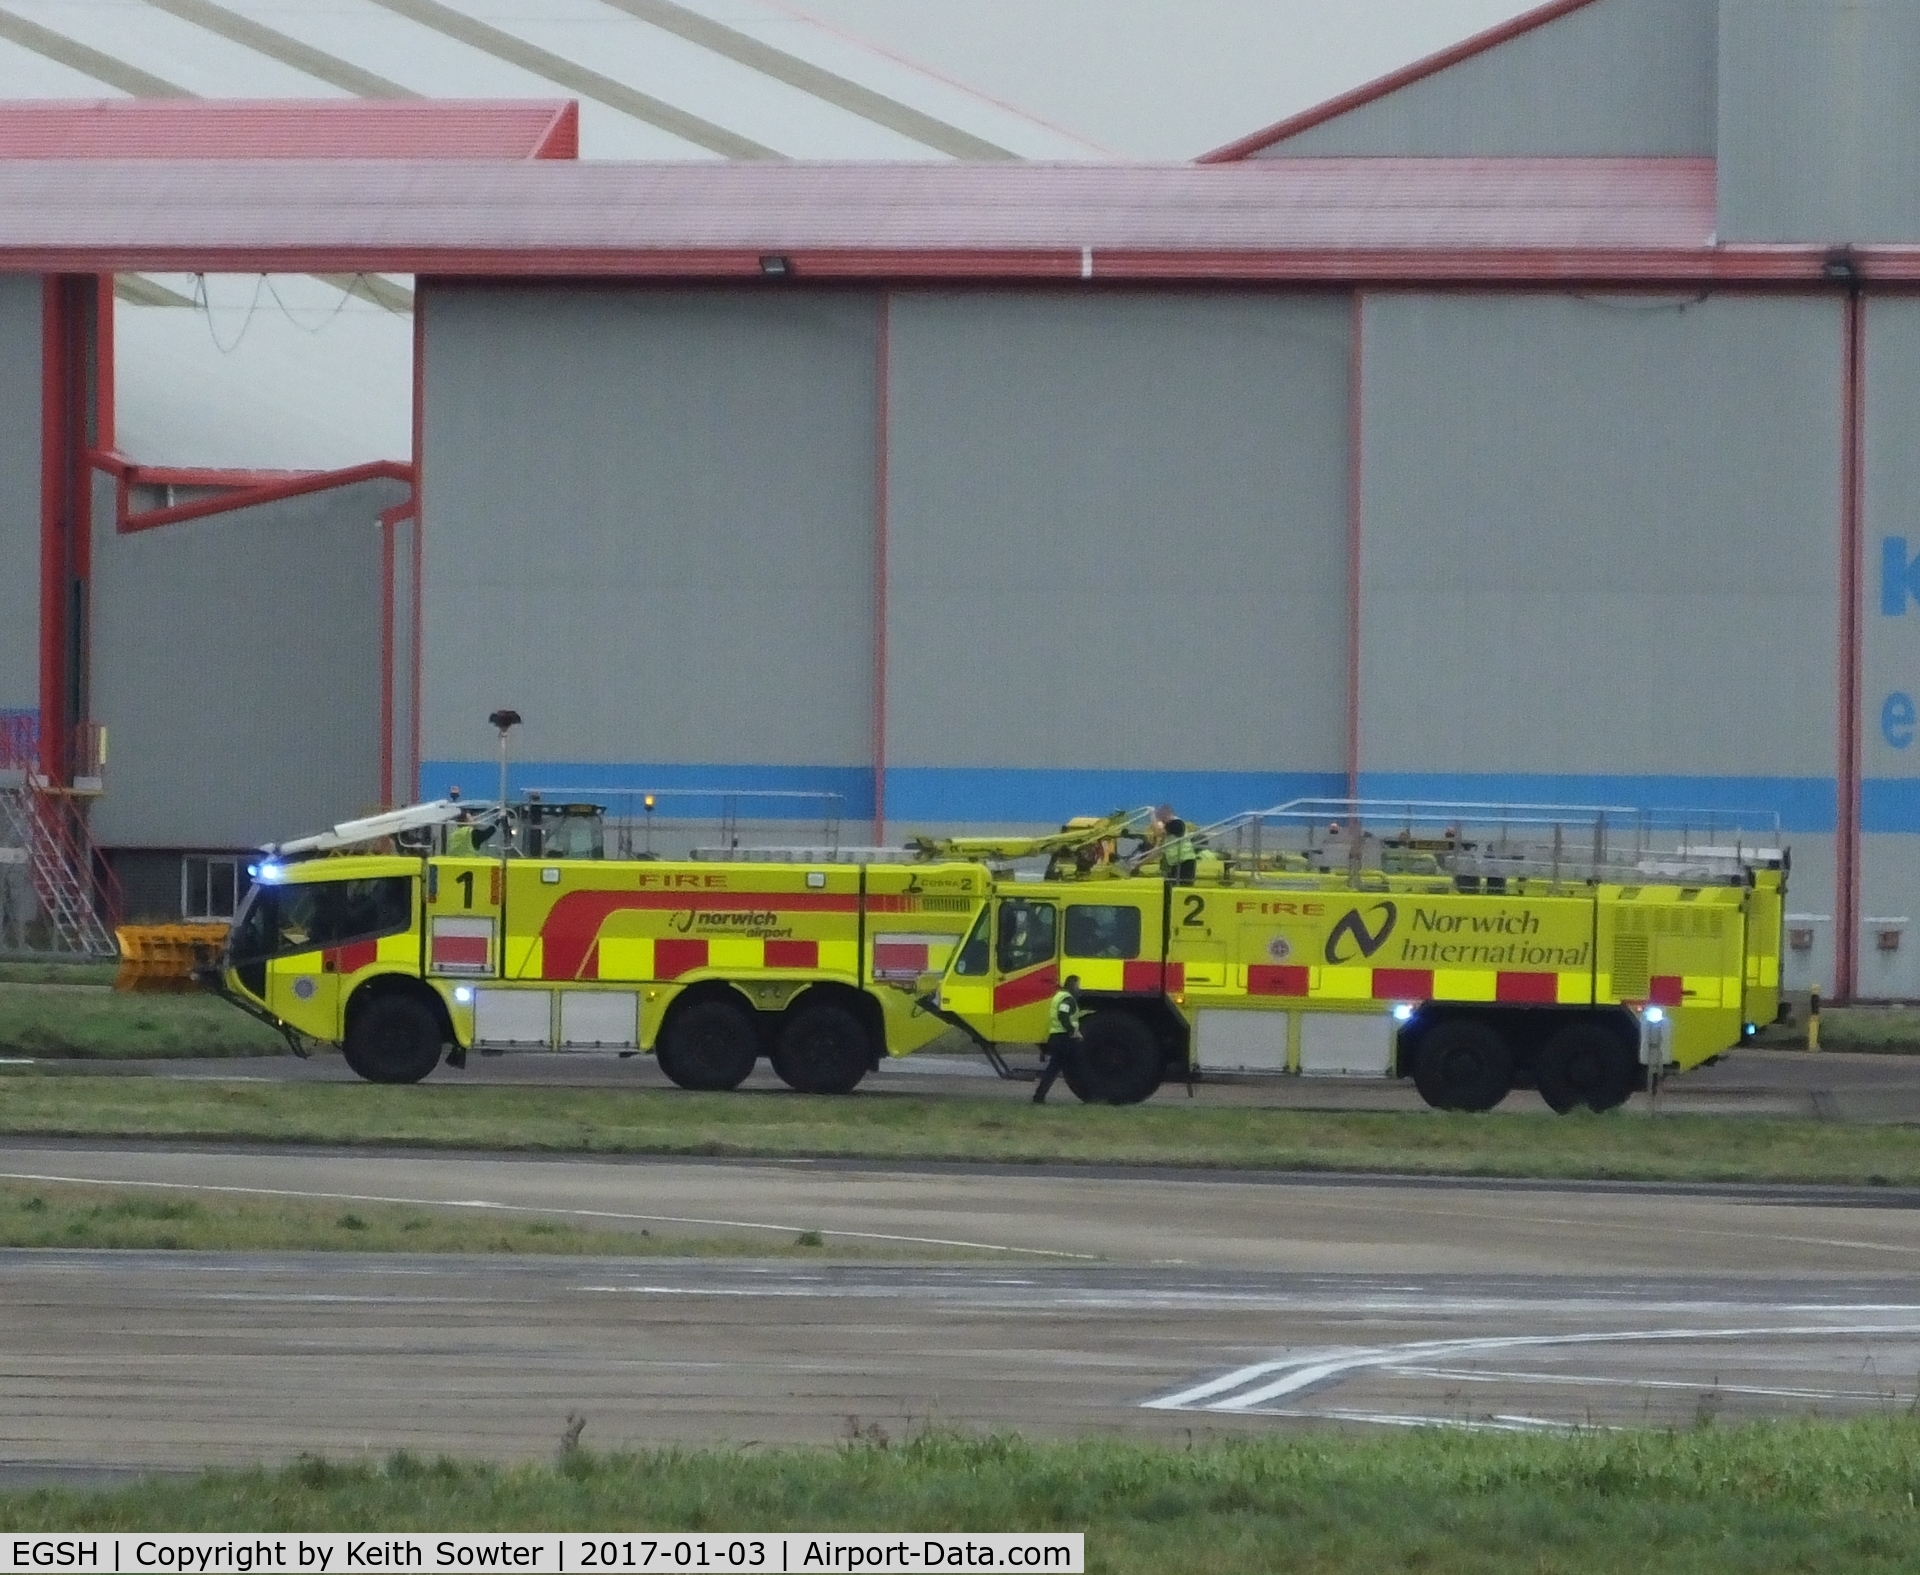 Norwich International Airport, Norwich, England United Kingdom (EGSH) - Two fire tenders